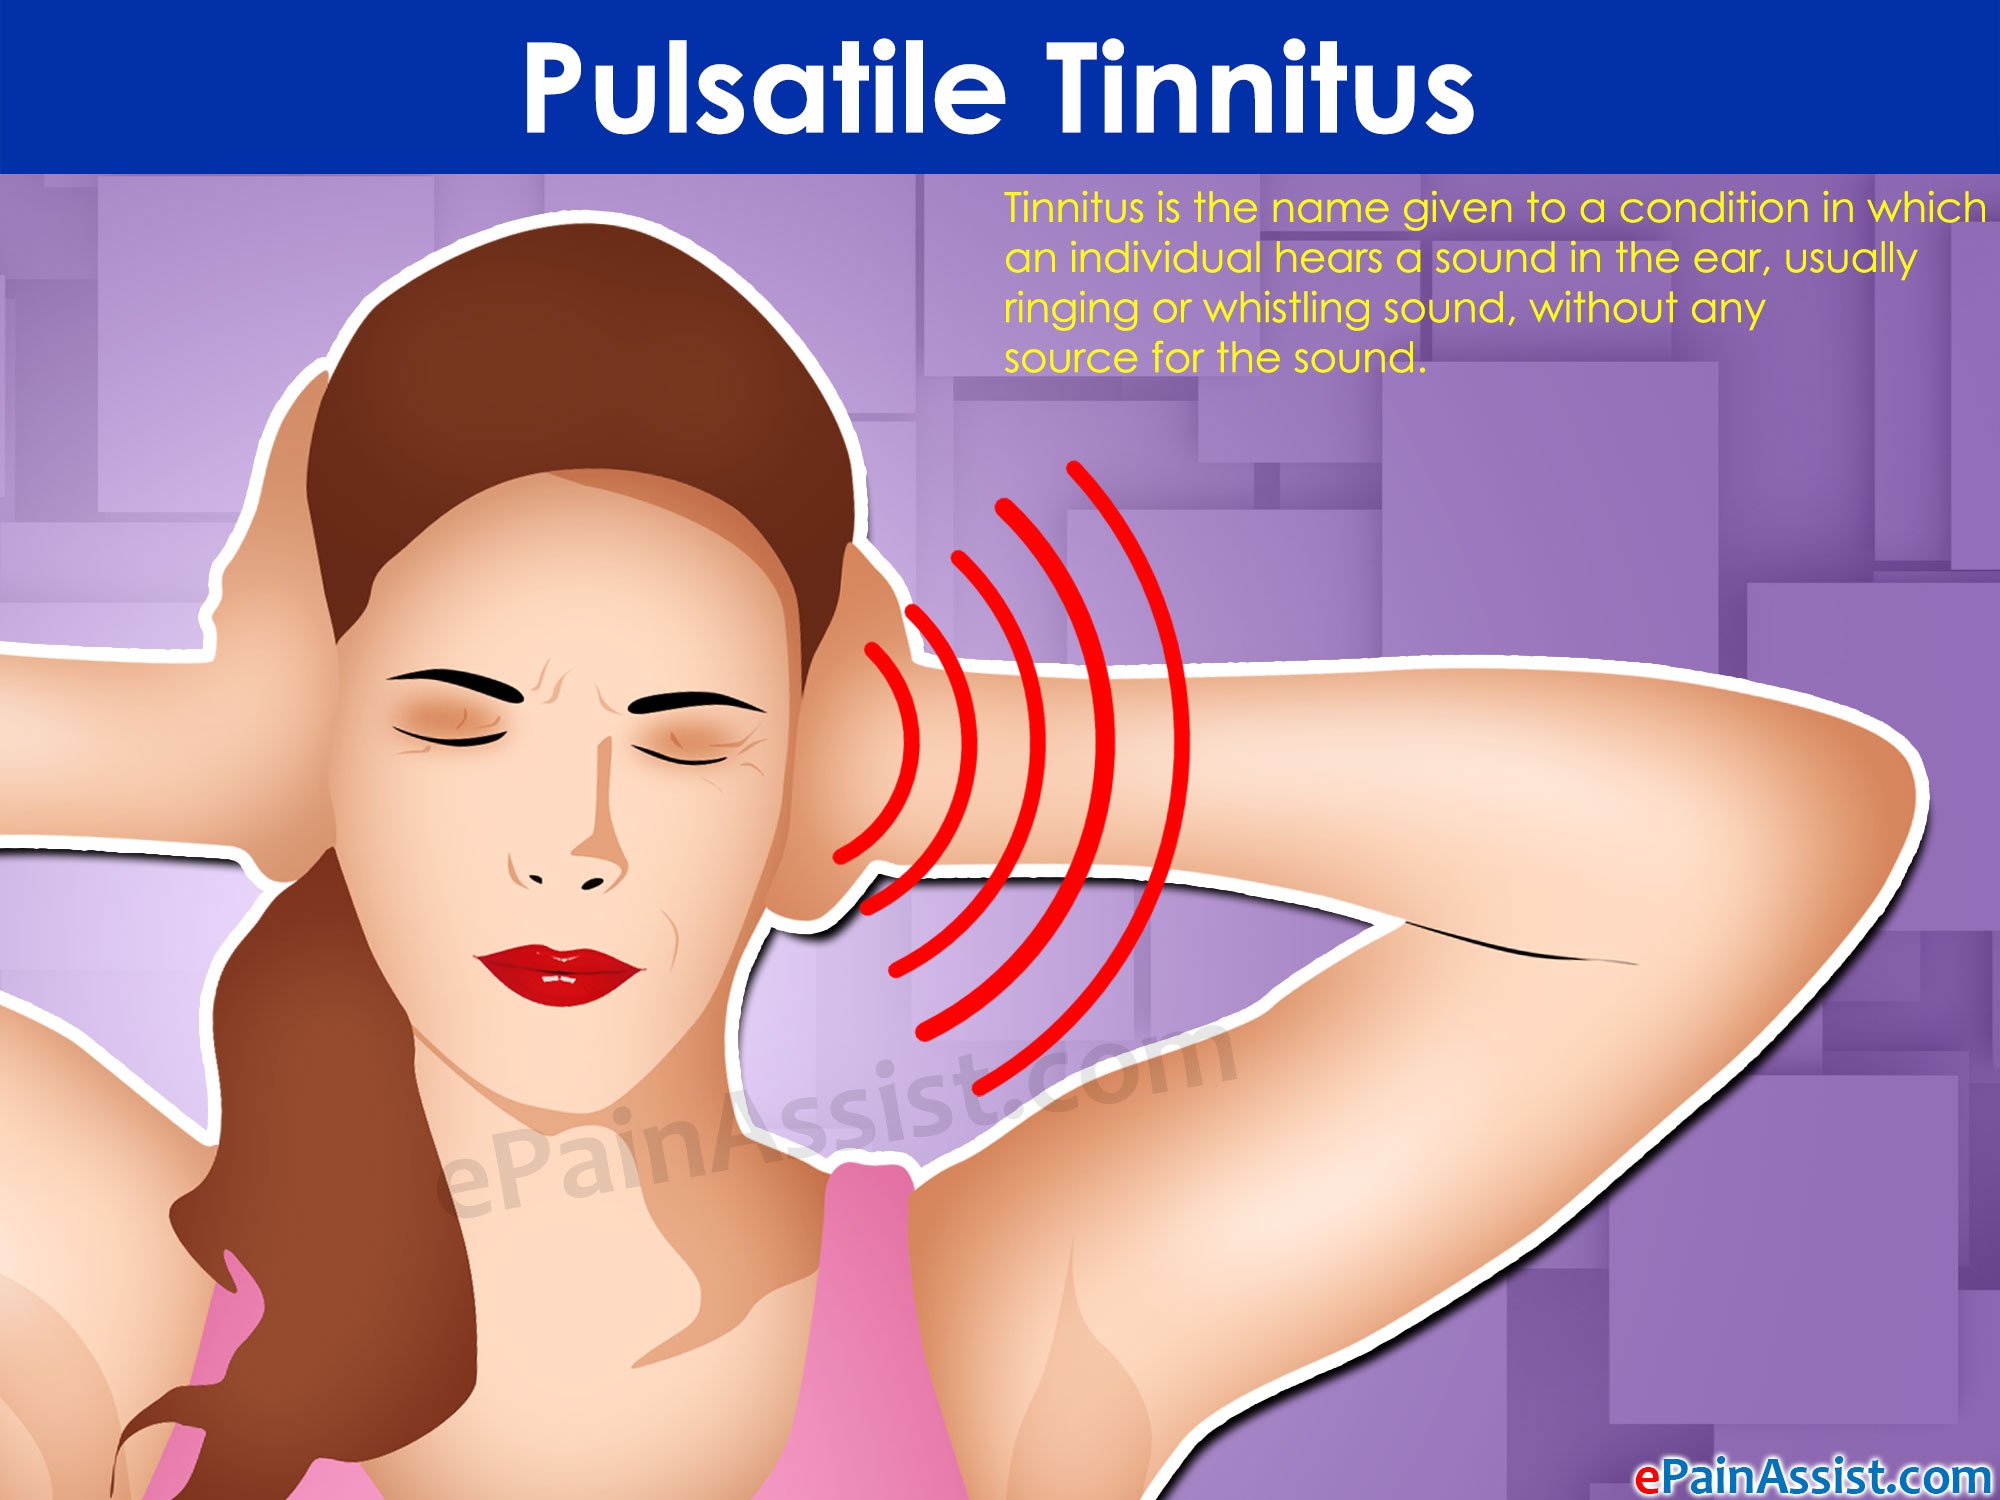 Pulsatile Tinnitus